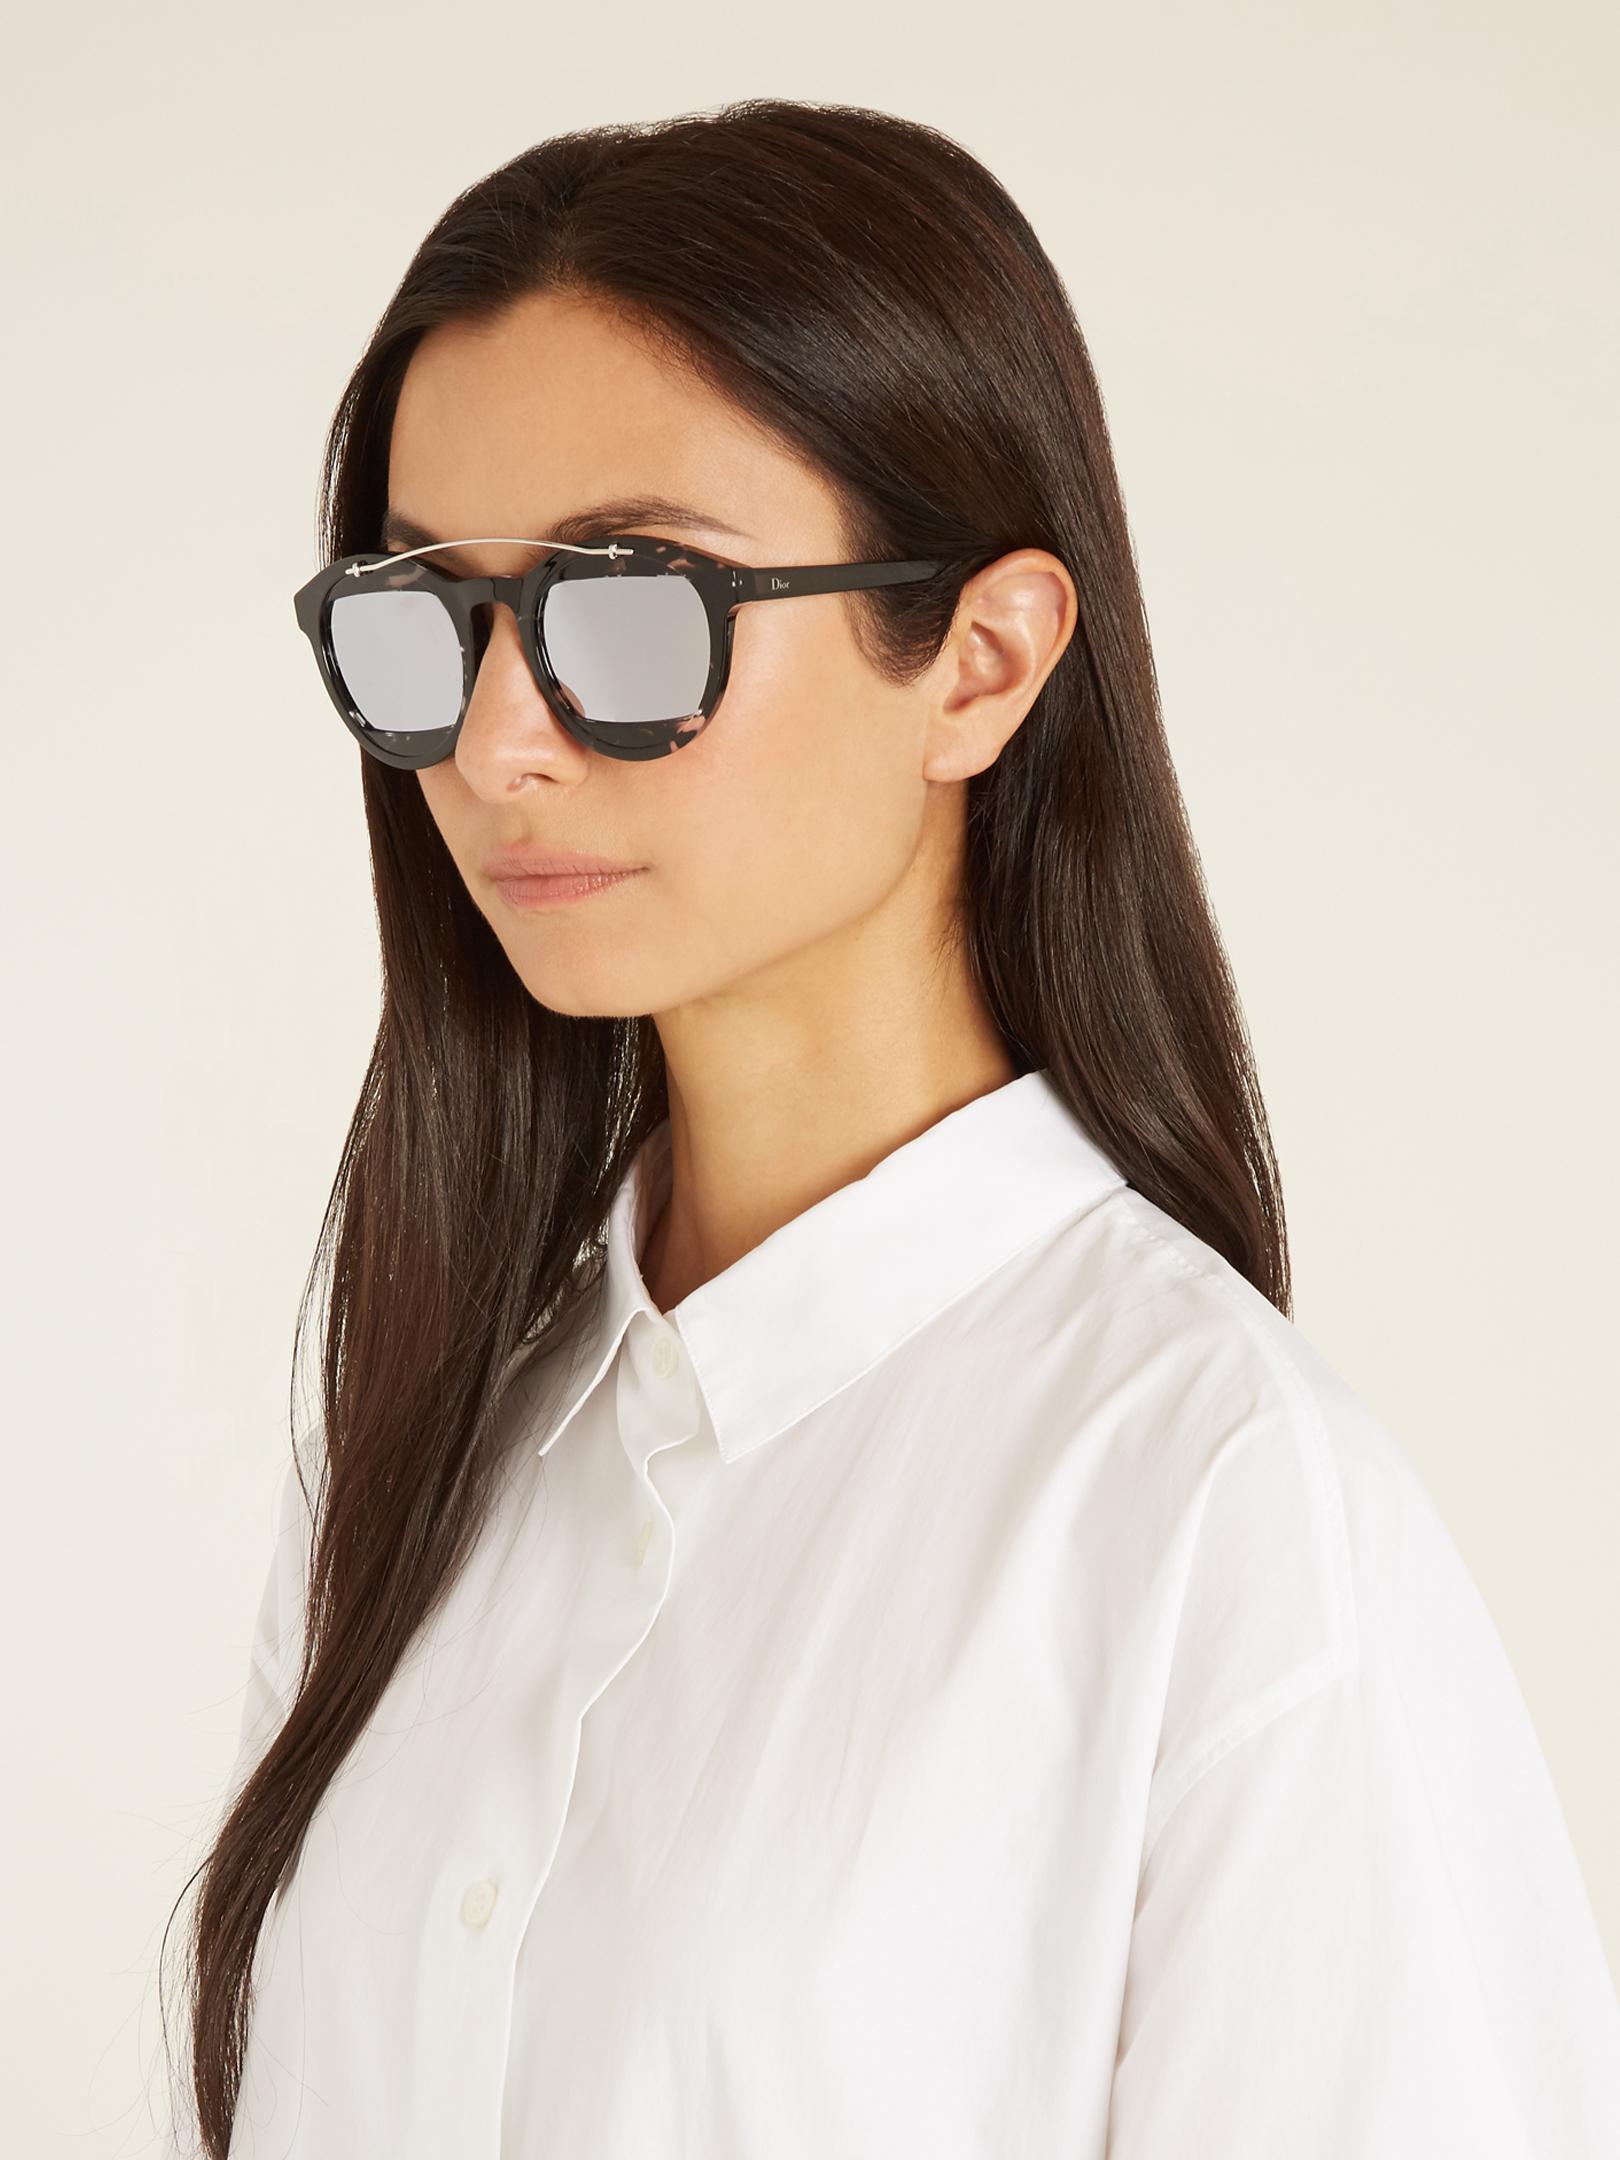 dior mania 1 sunglasses, OFF 70%,Buy!